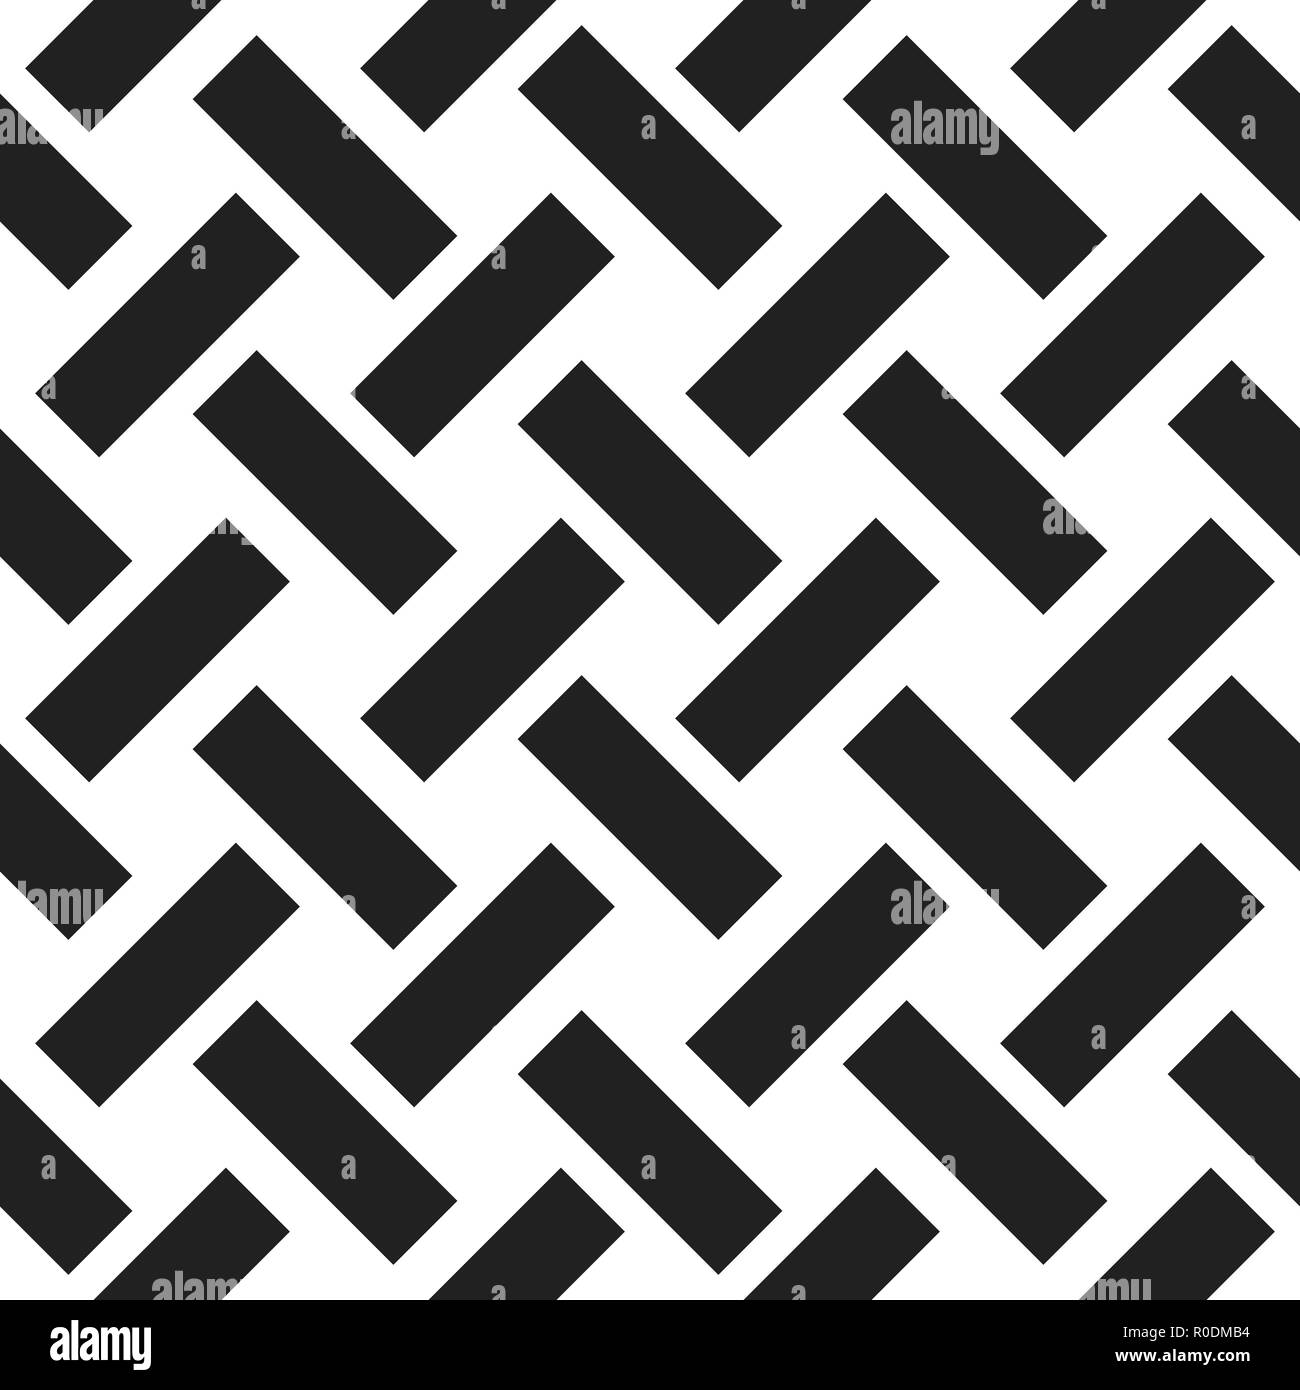 Checkered seamless pattern. Simple stylish abstract geometric